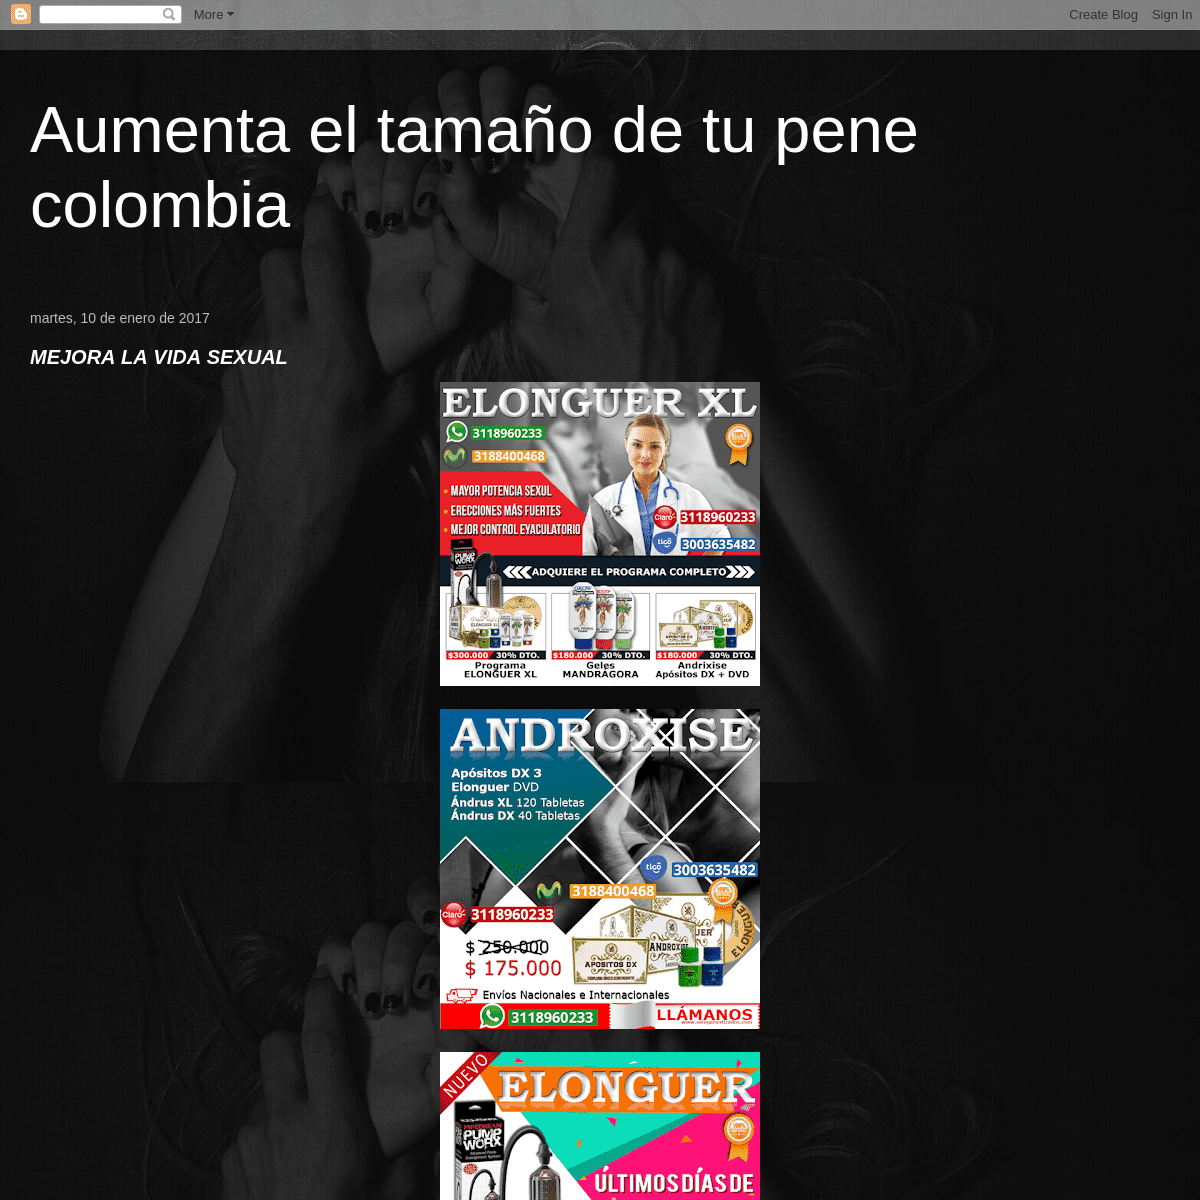 A complete backup of penegrandecolombia.blogspot.com